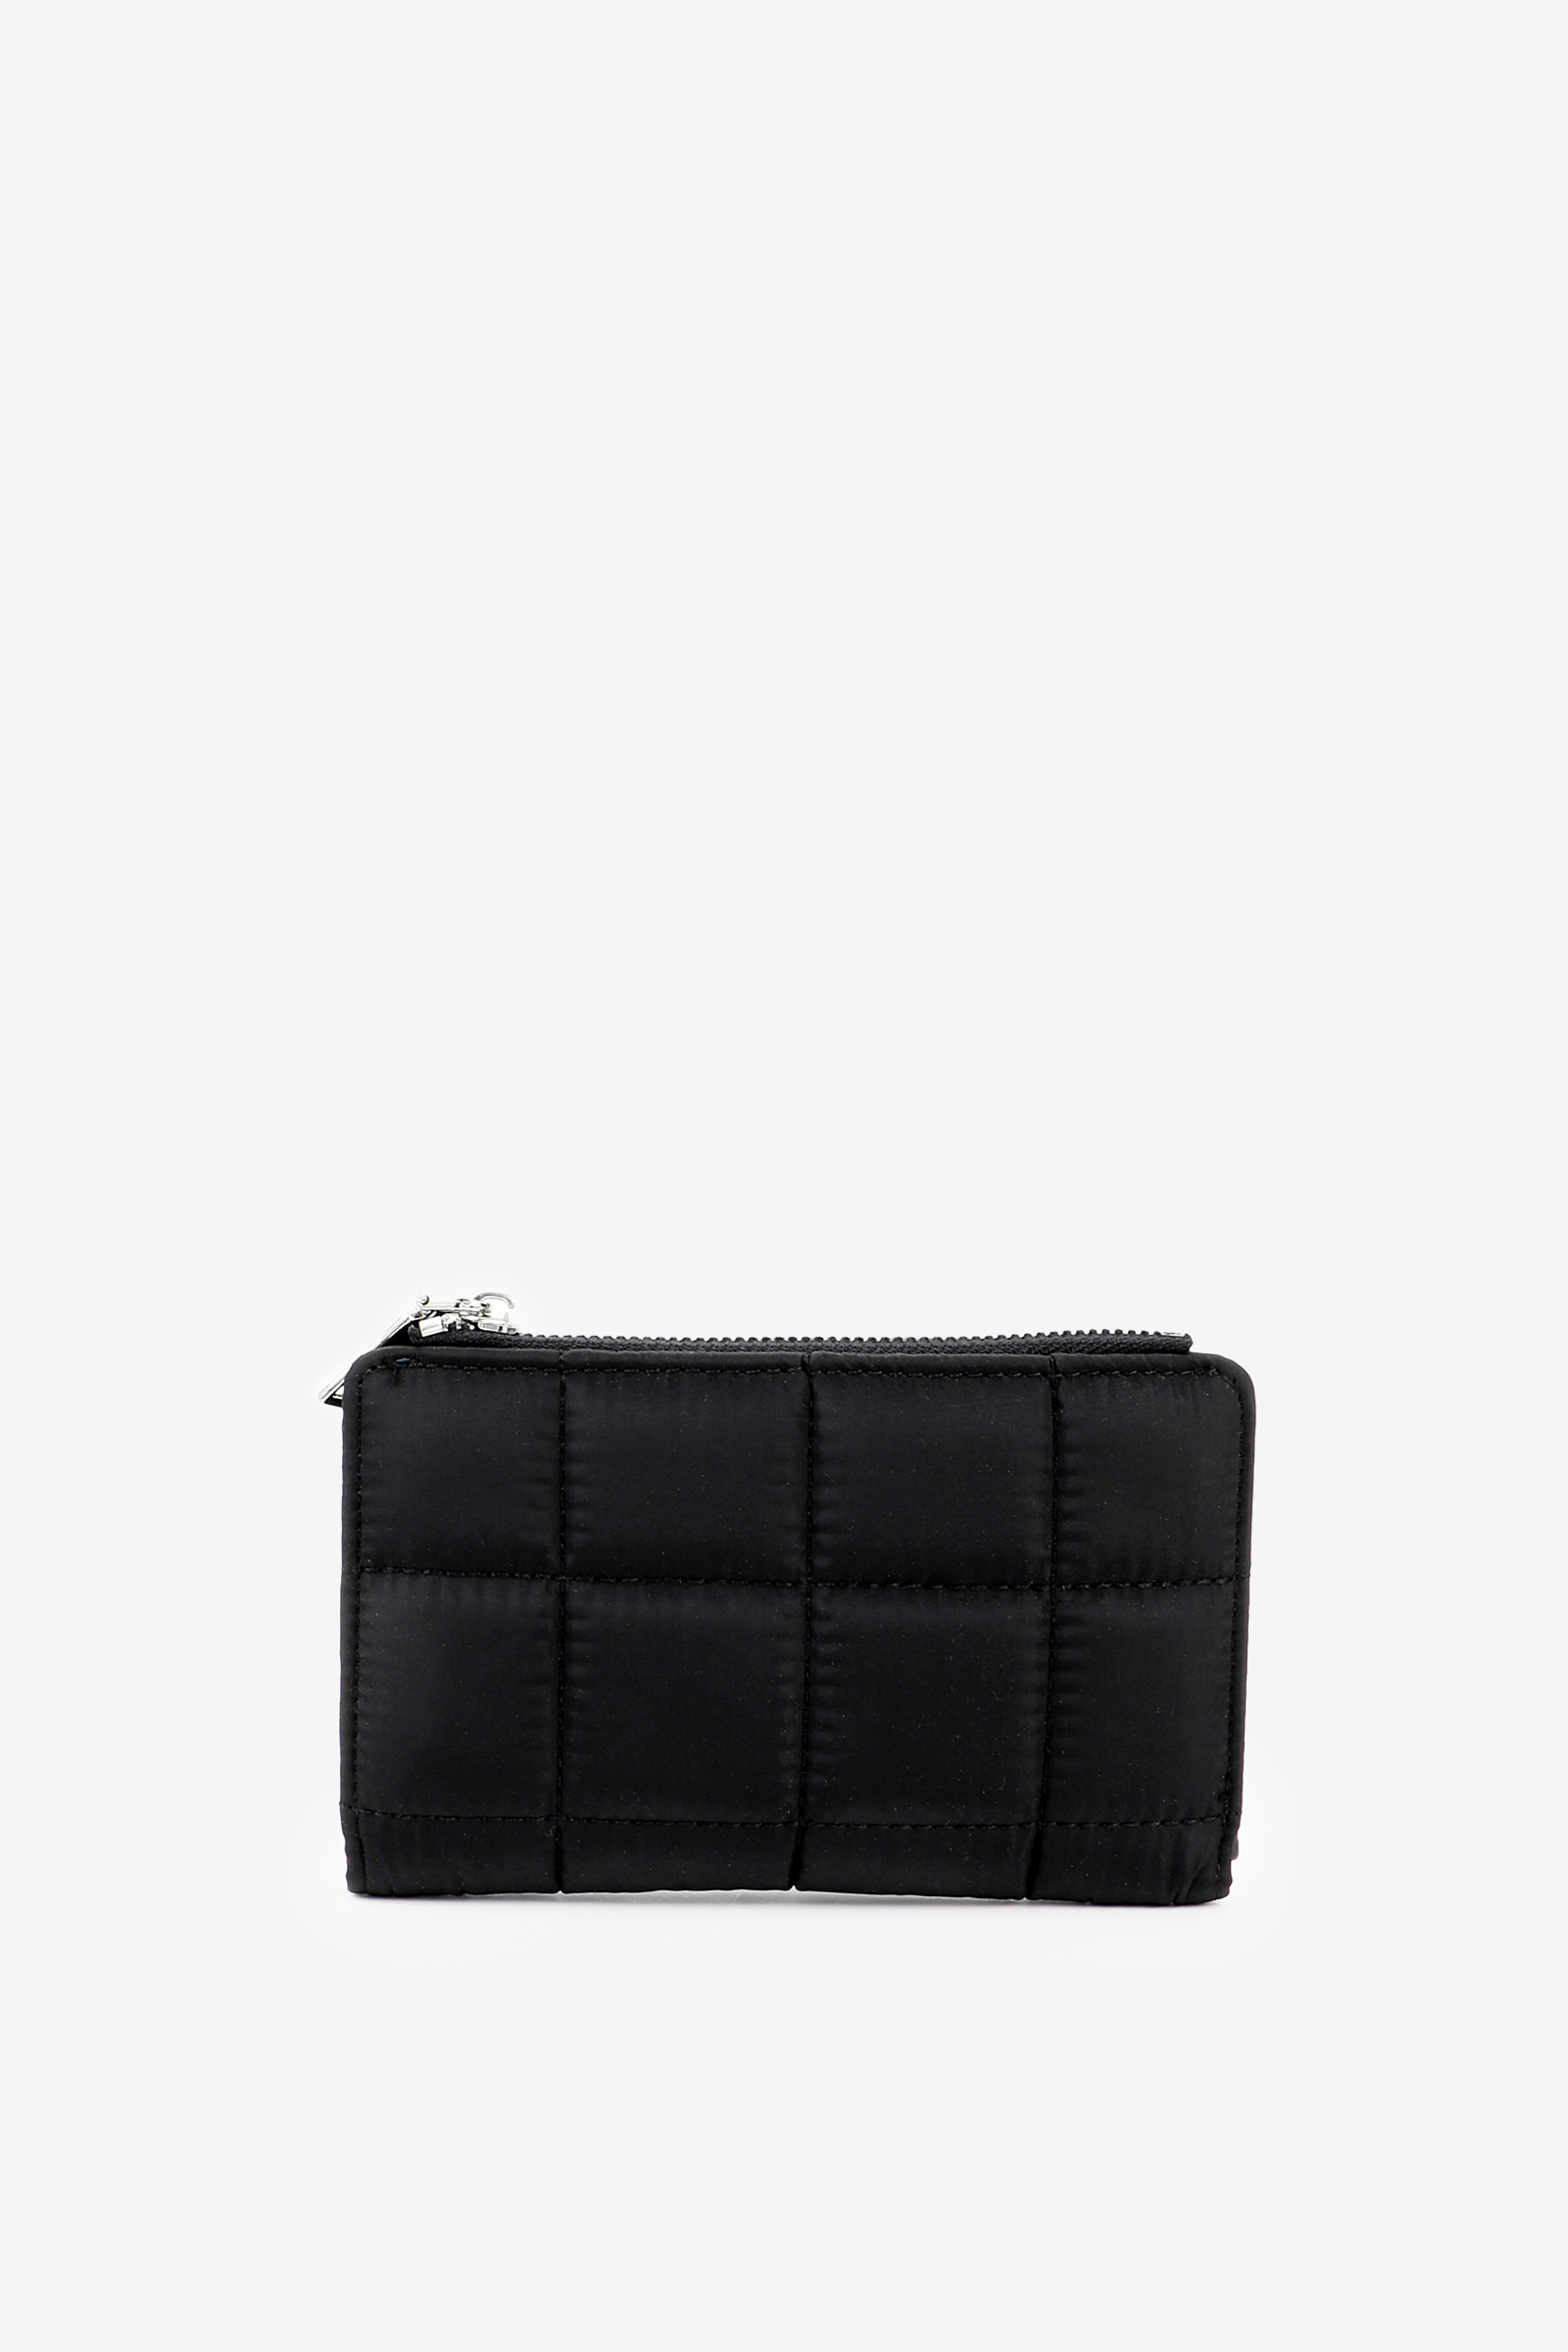 Ardene Nylon Quilted Wallet in Black | Polyester/Nylon